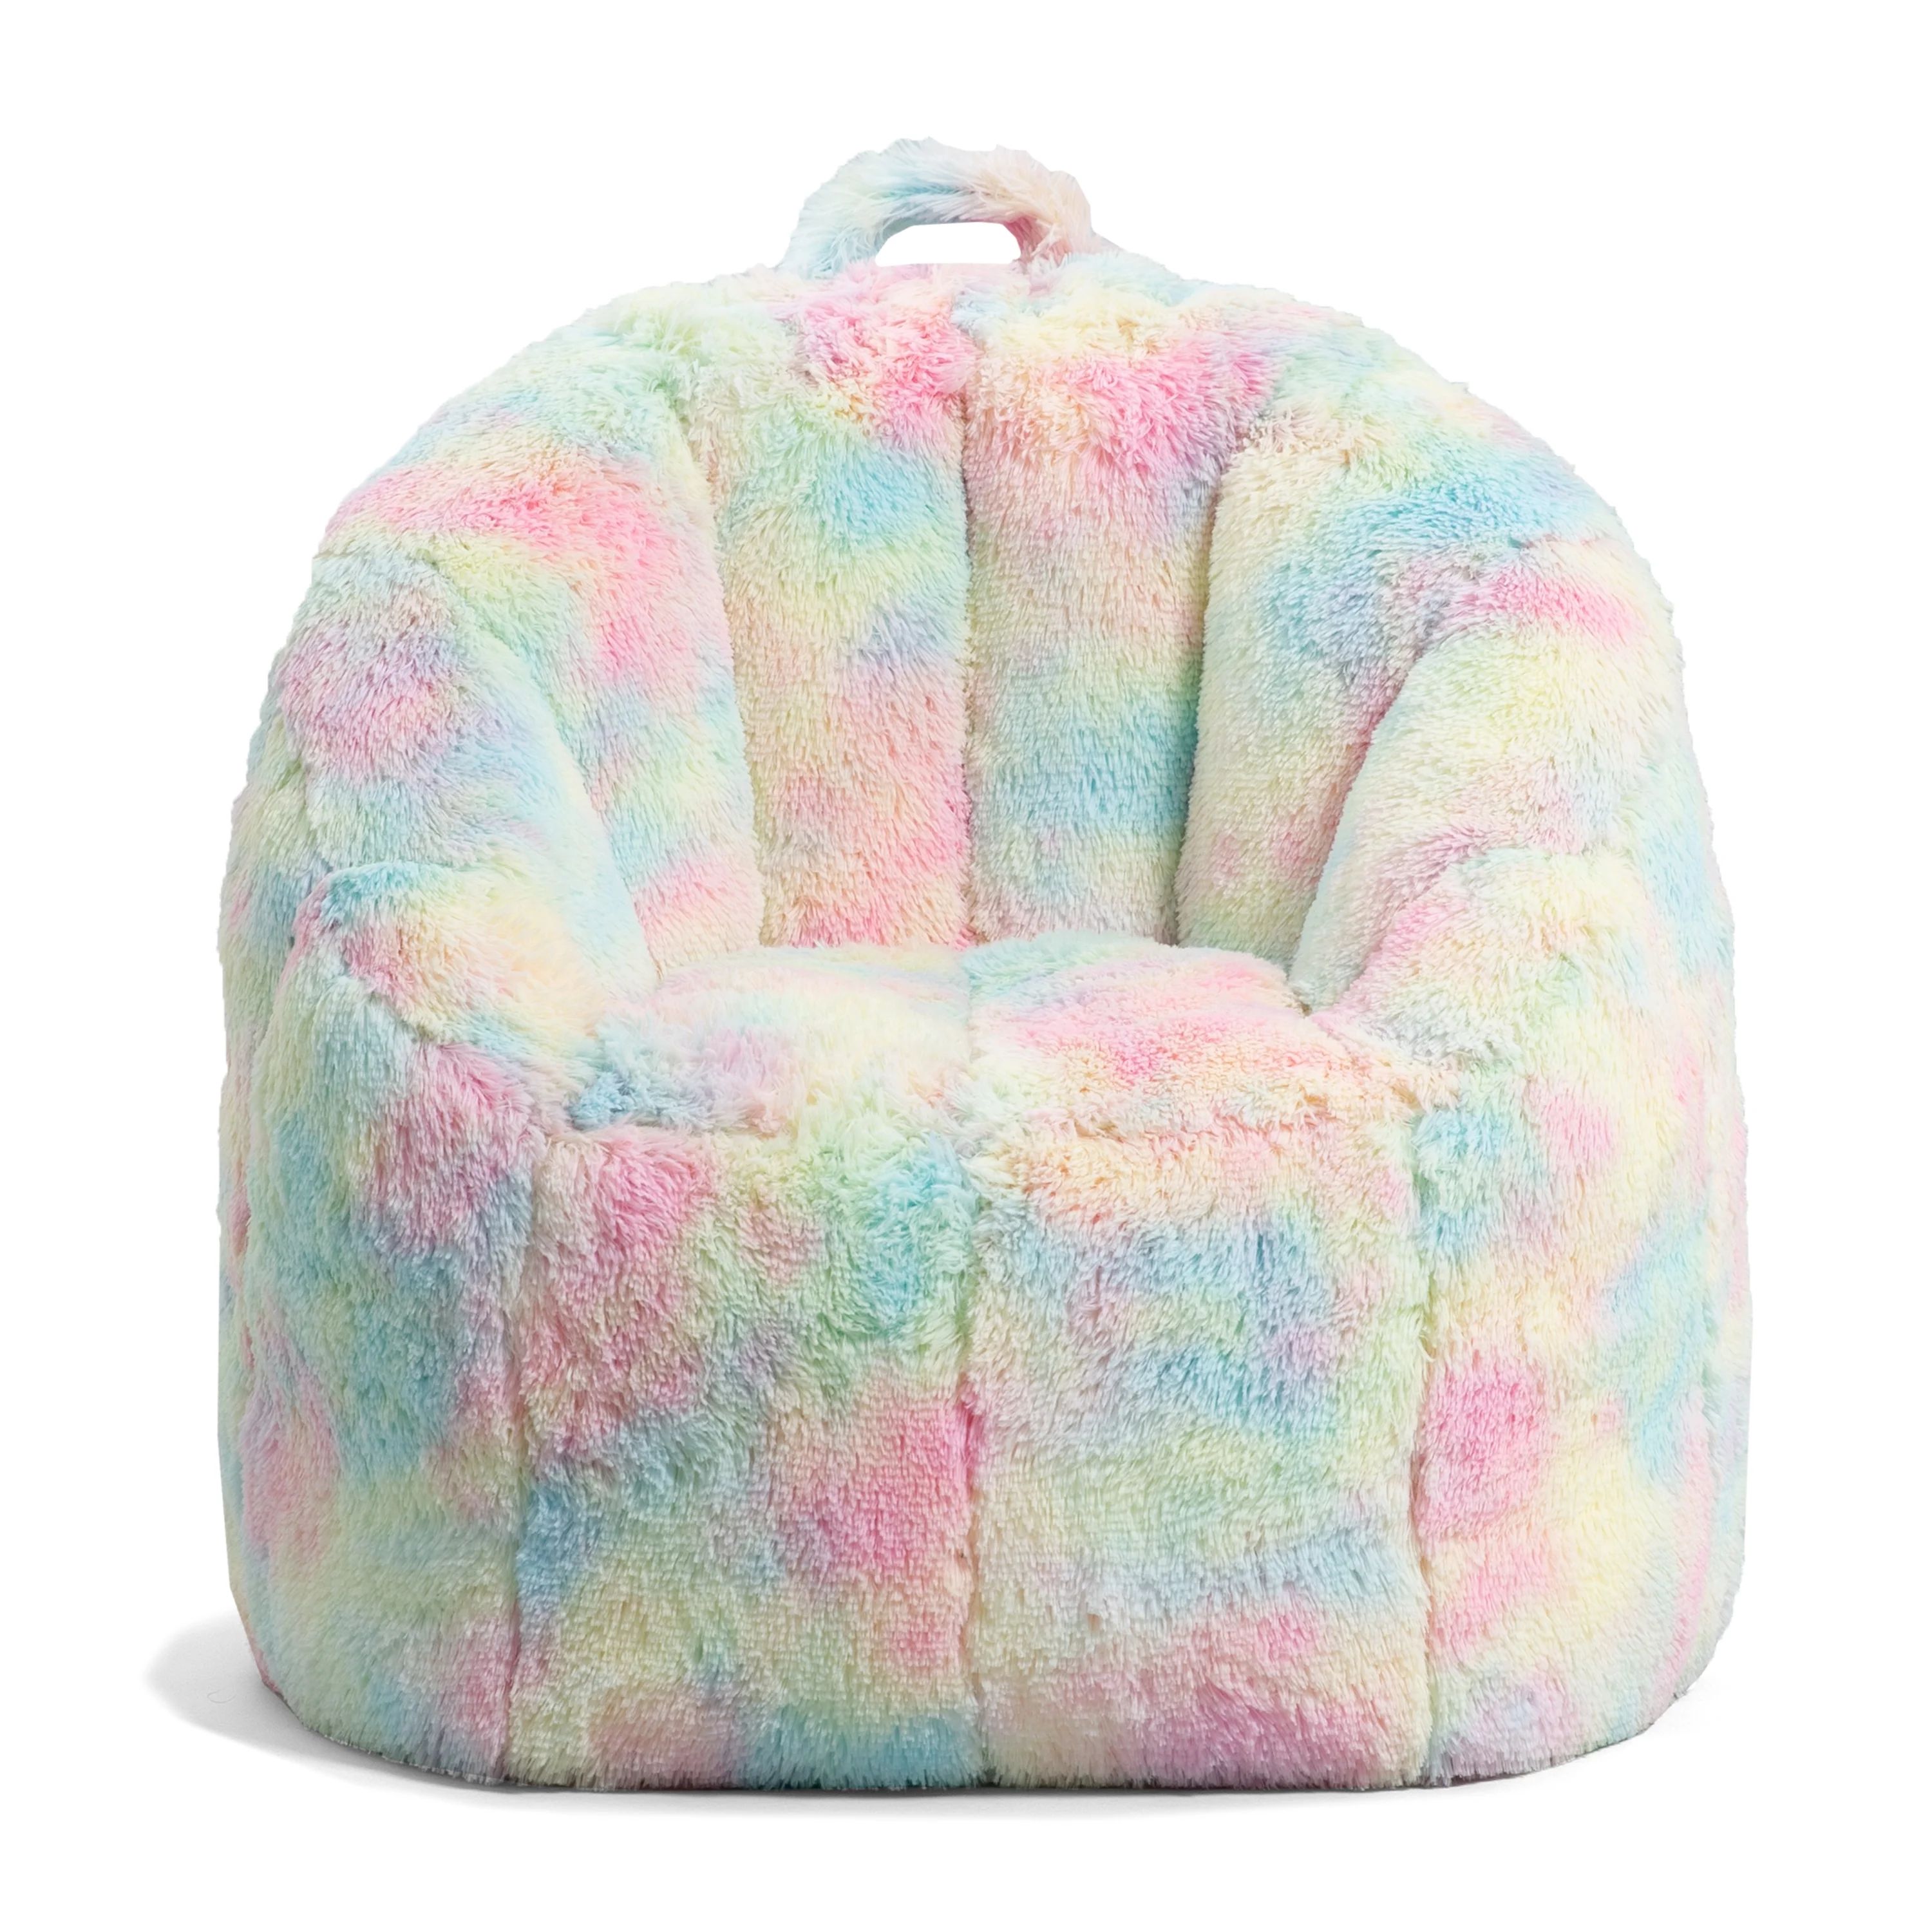 Big Joe Joey Bean Bag Chair, Plushie, Kids/Teens, 2ft, Unicorn Rainbow | Walmart (US)